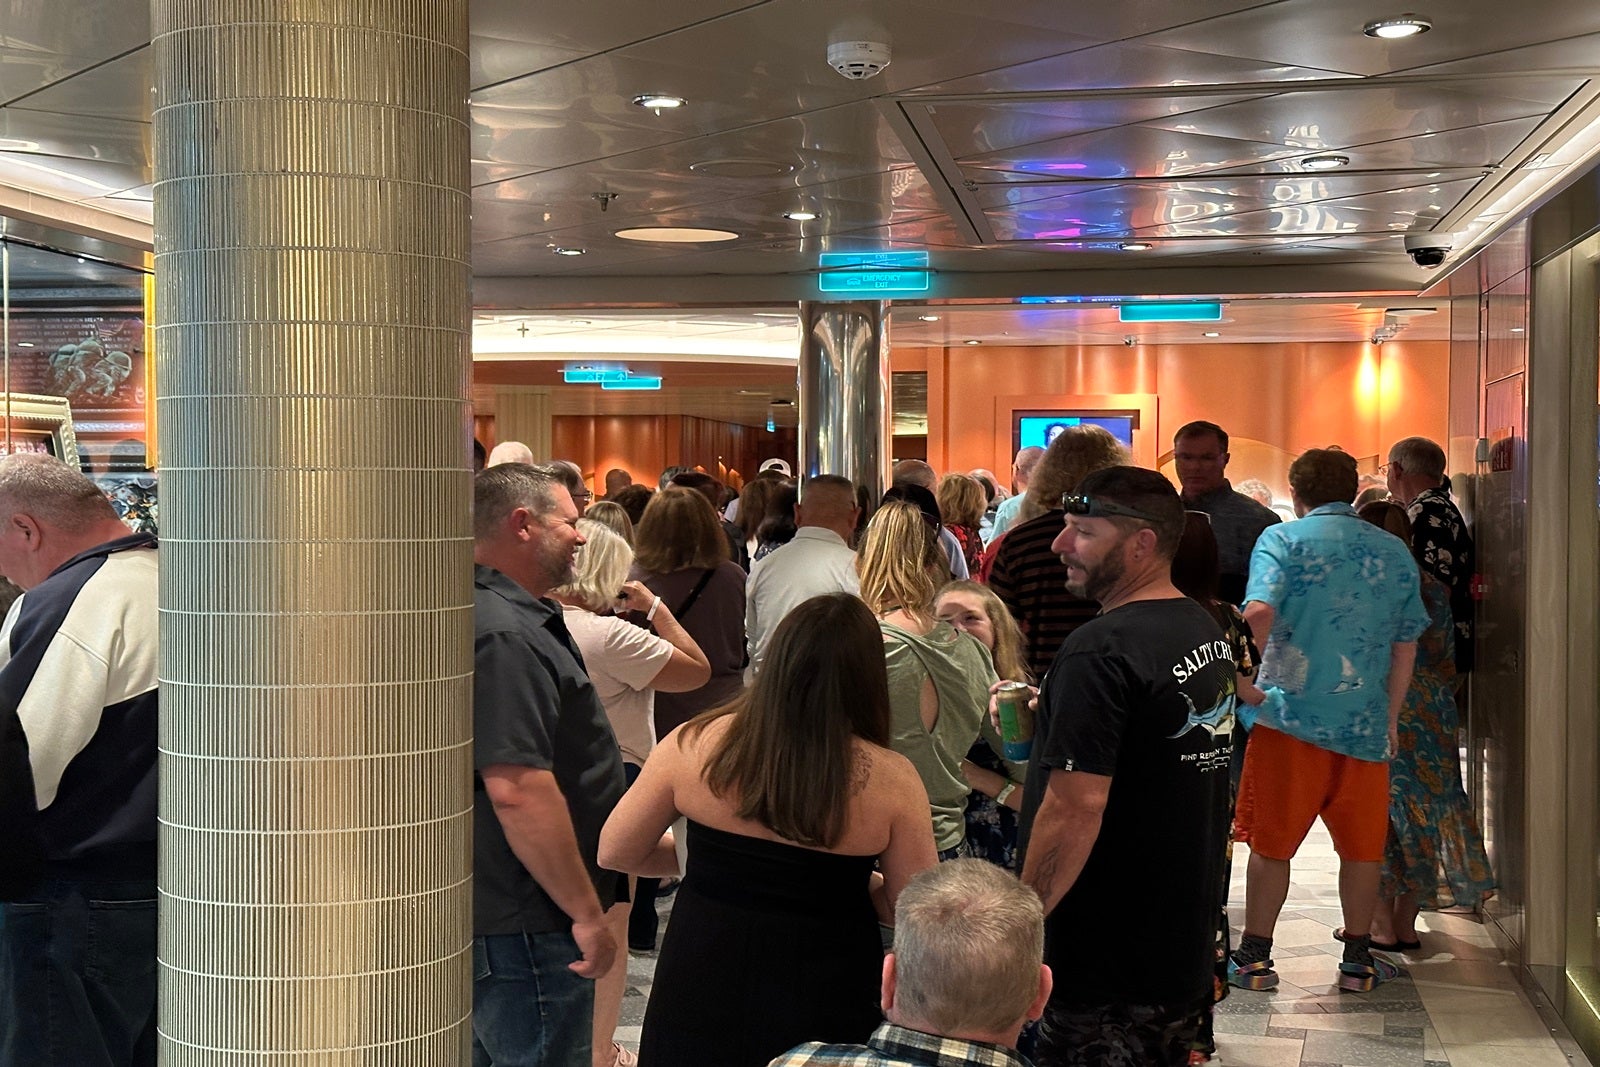 A crowd gathered in a cruise ship corridor